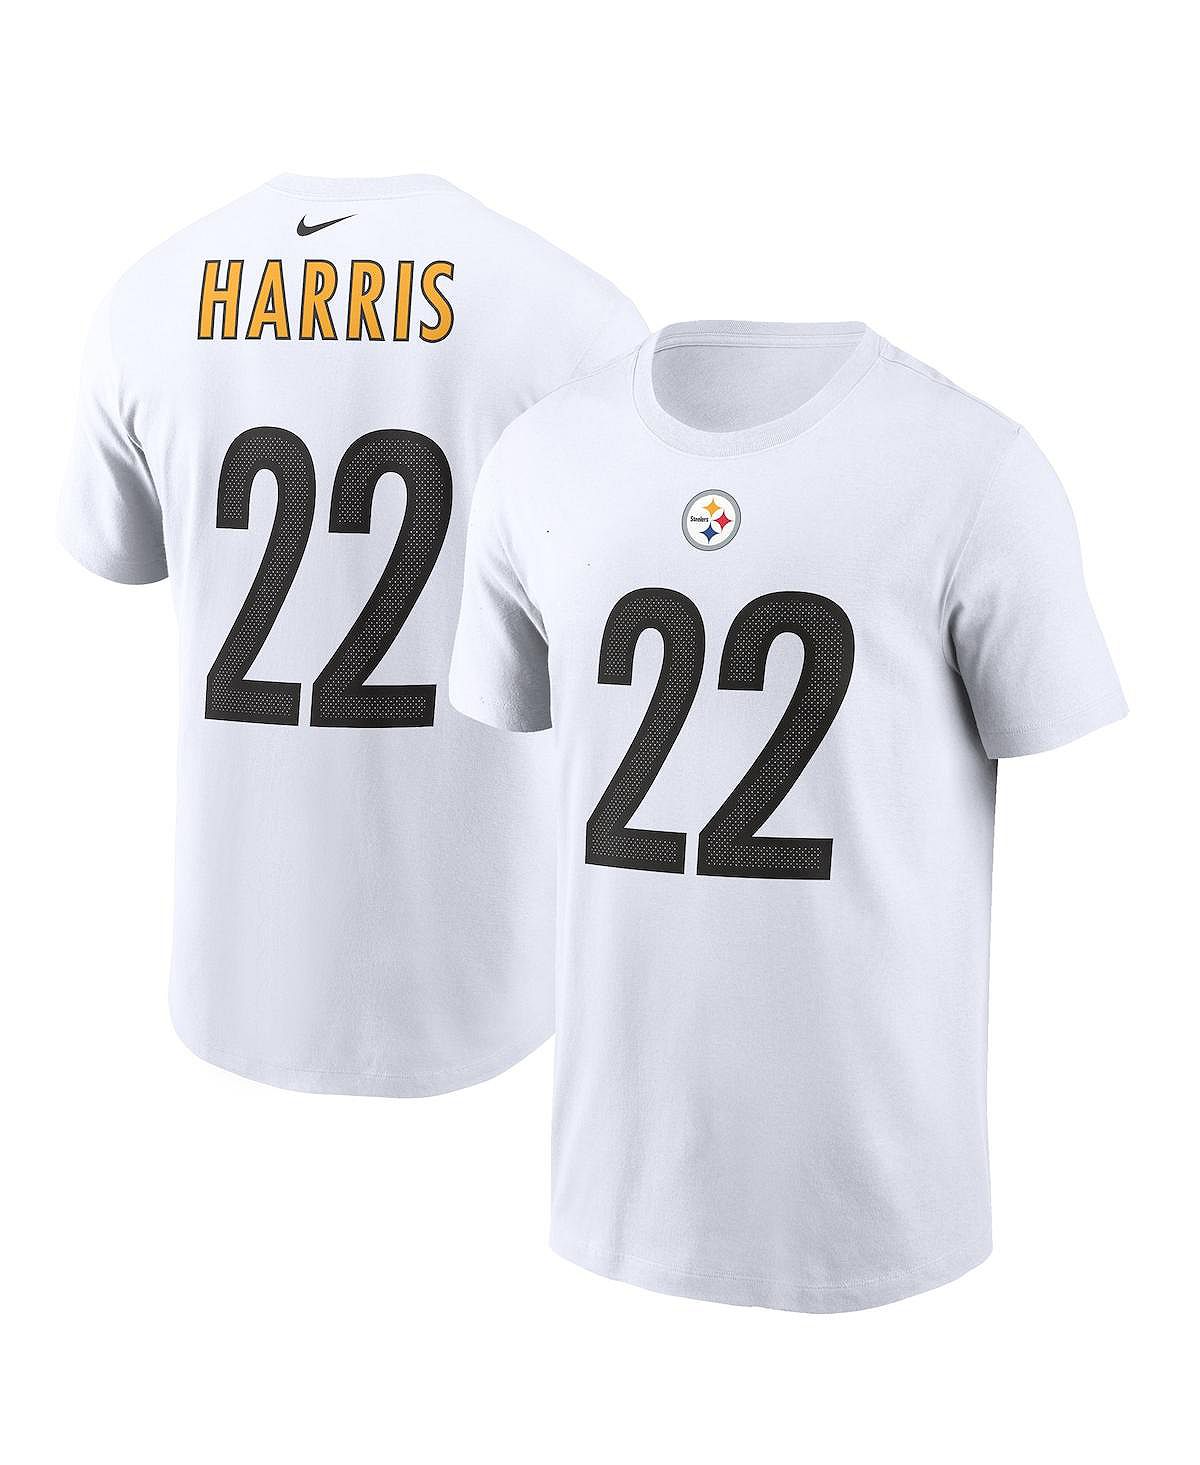 Футболка Nike Najee Harris Pittsburgh Steelers, белый мужская футболка najee harris black pittsburgh steelers с именем и номером игрока футболка tri blend majestic